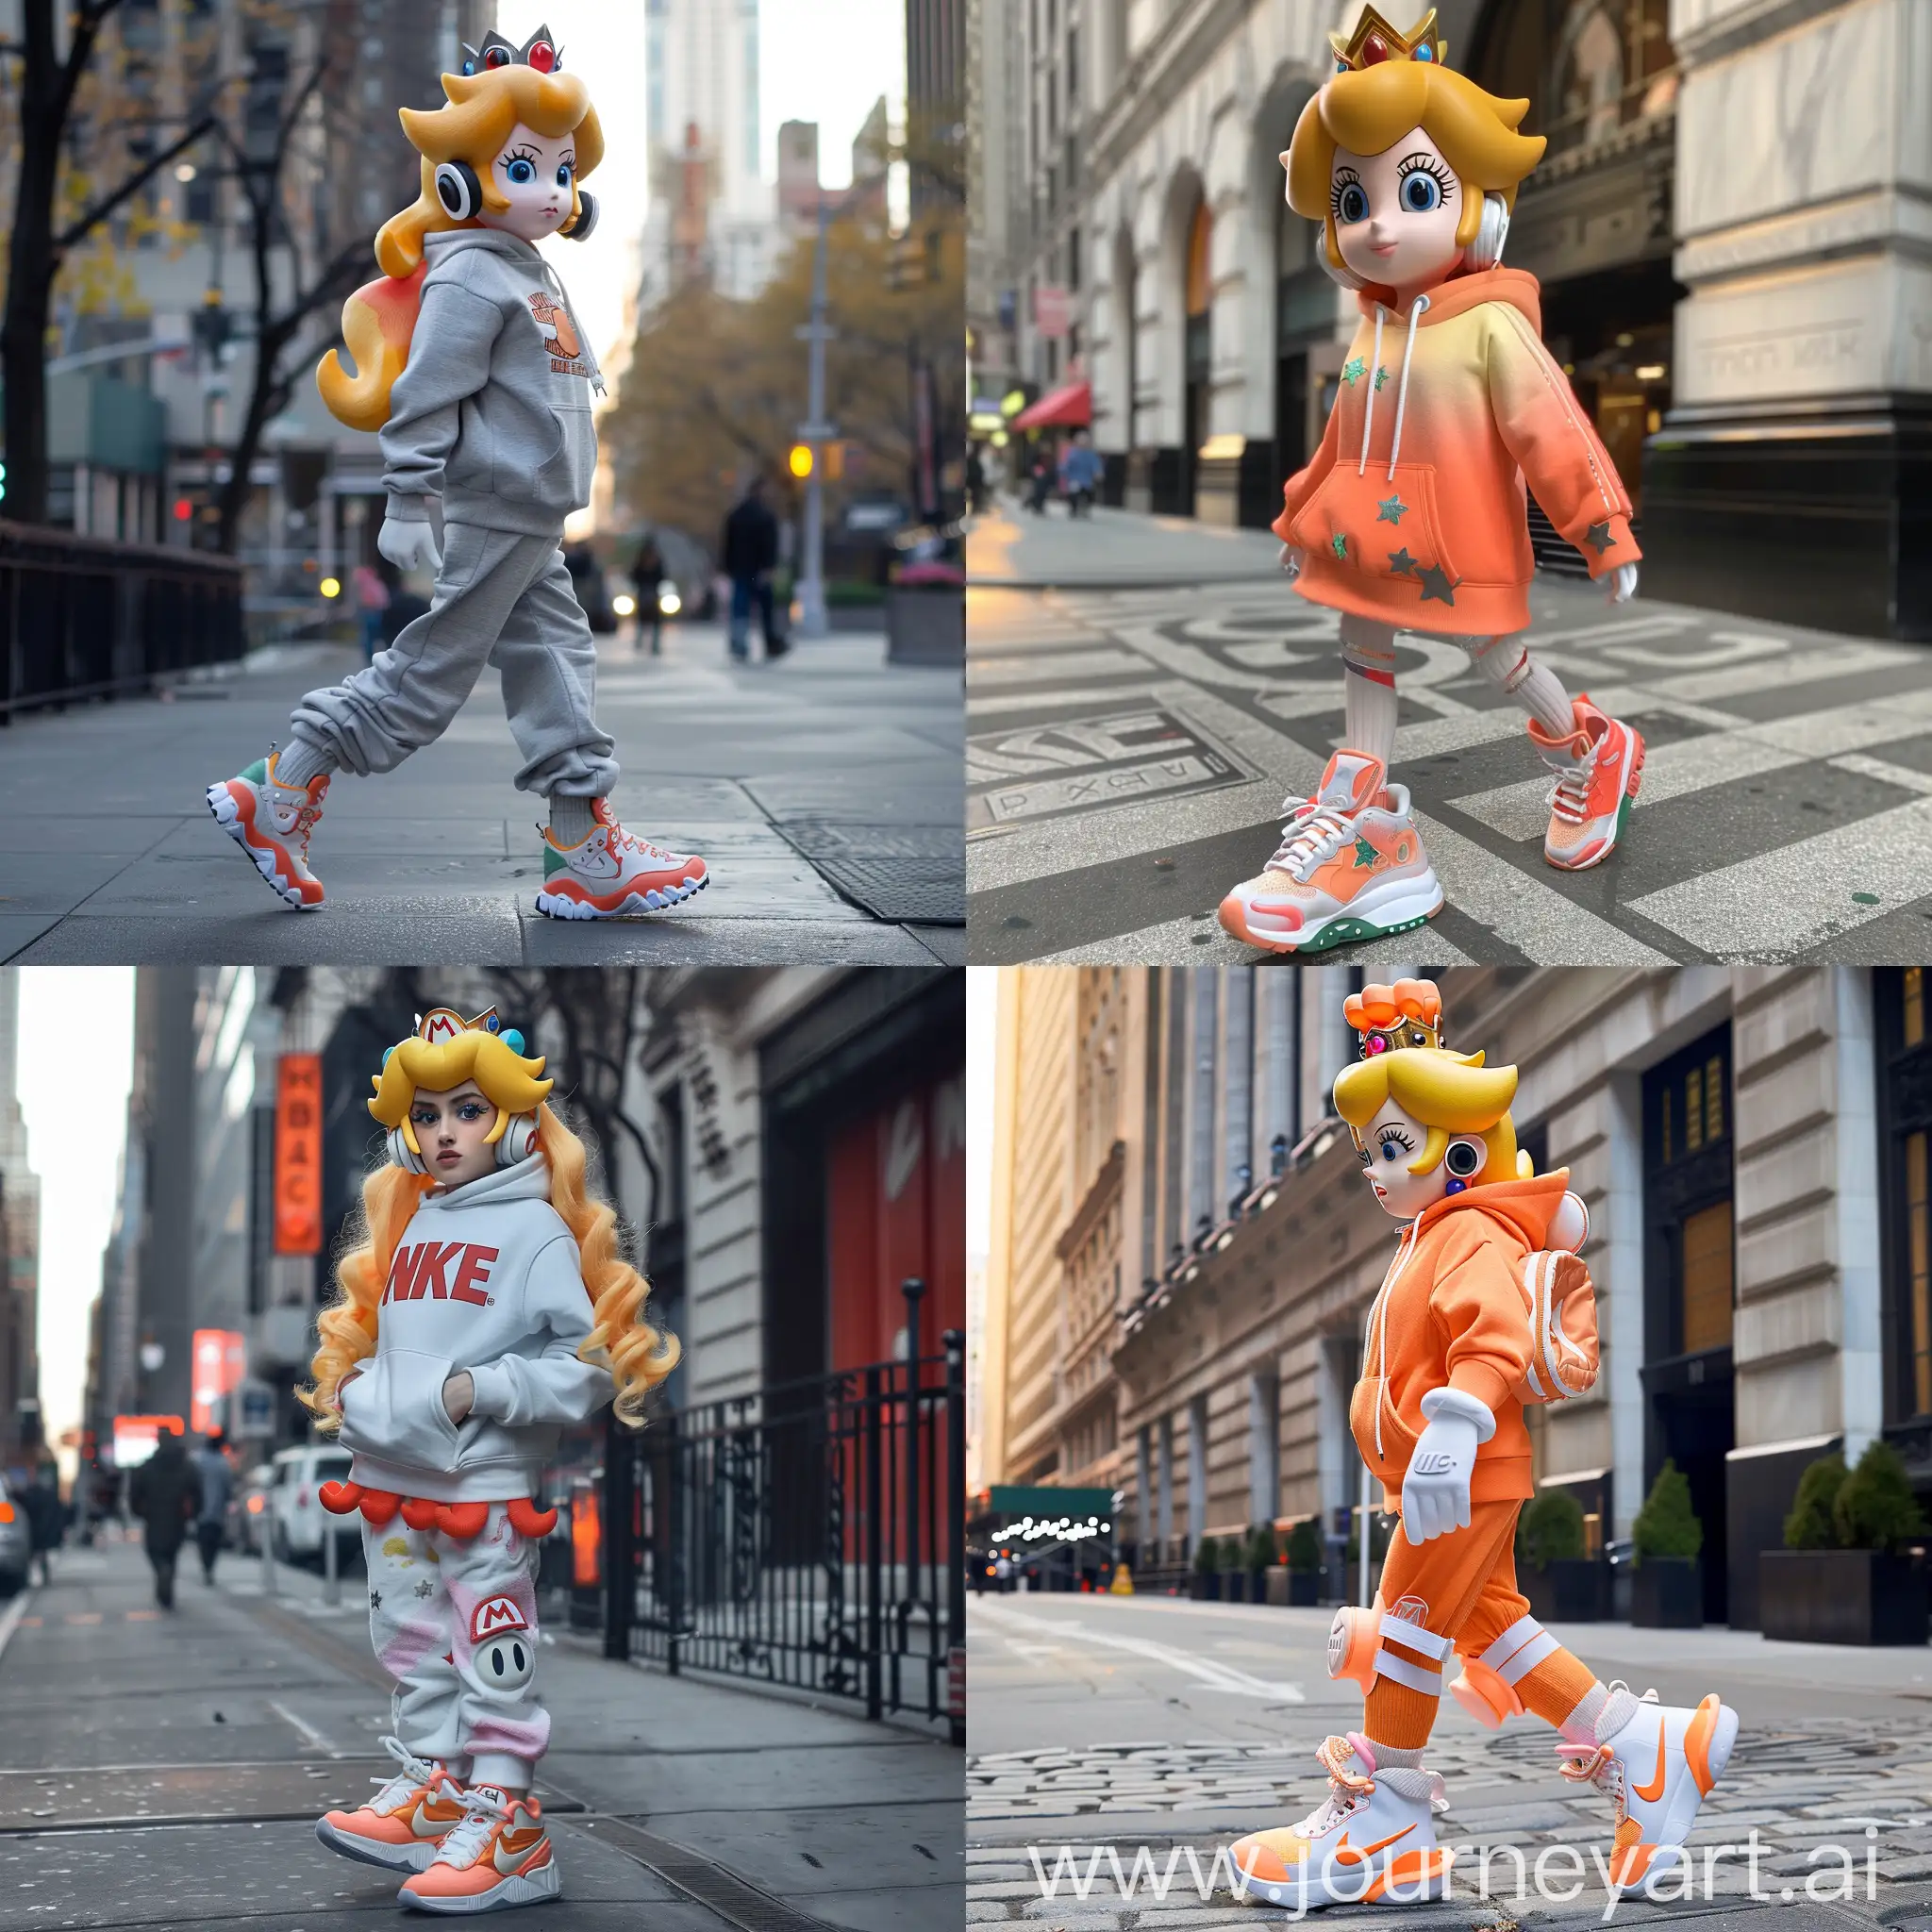 Princess-Peach-Walking-in-New-York-City-with-Nike-Hoodie-and-Beats-Headphones